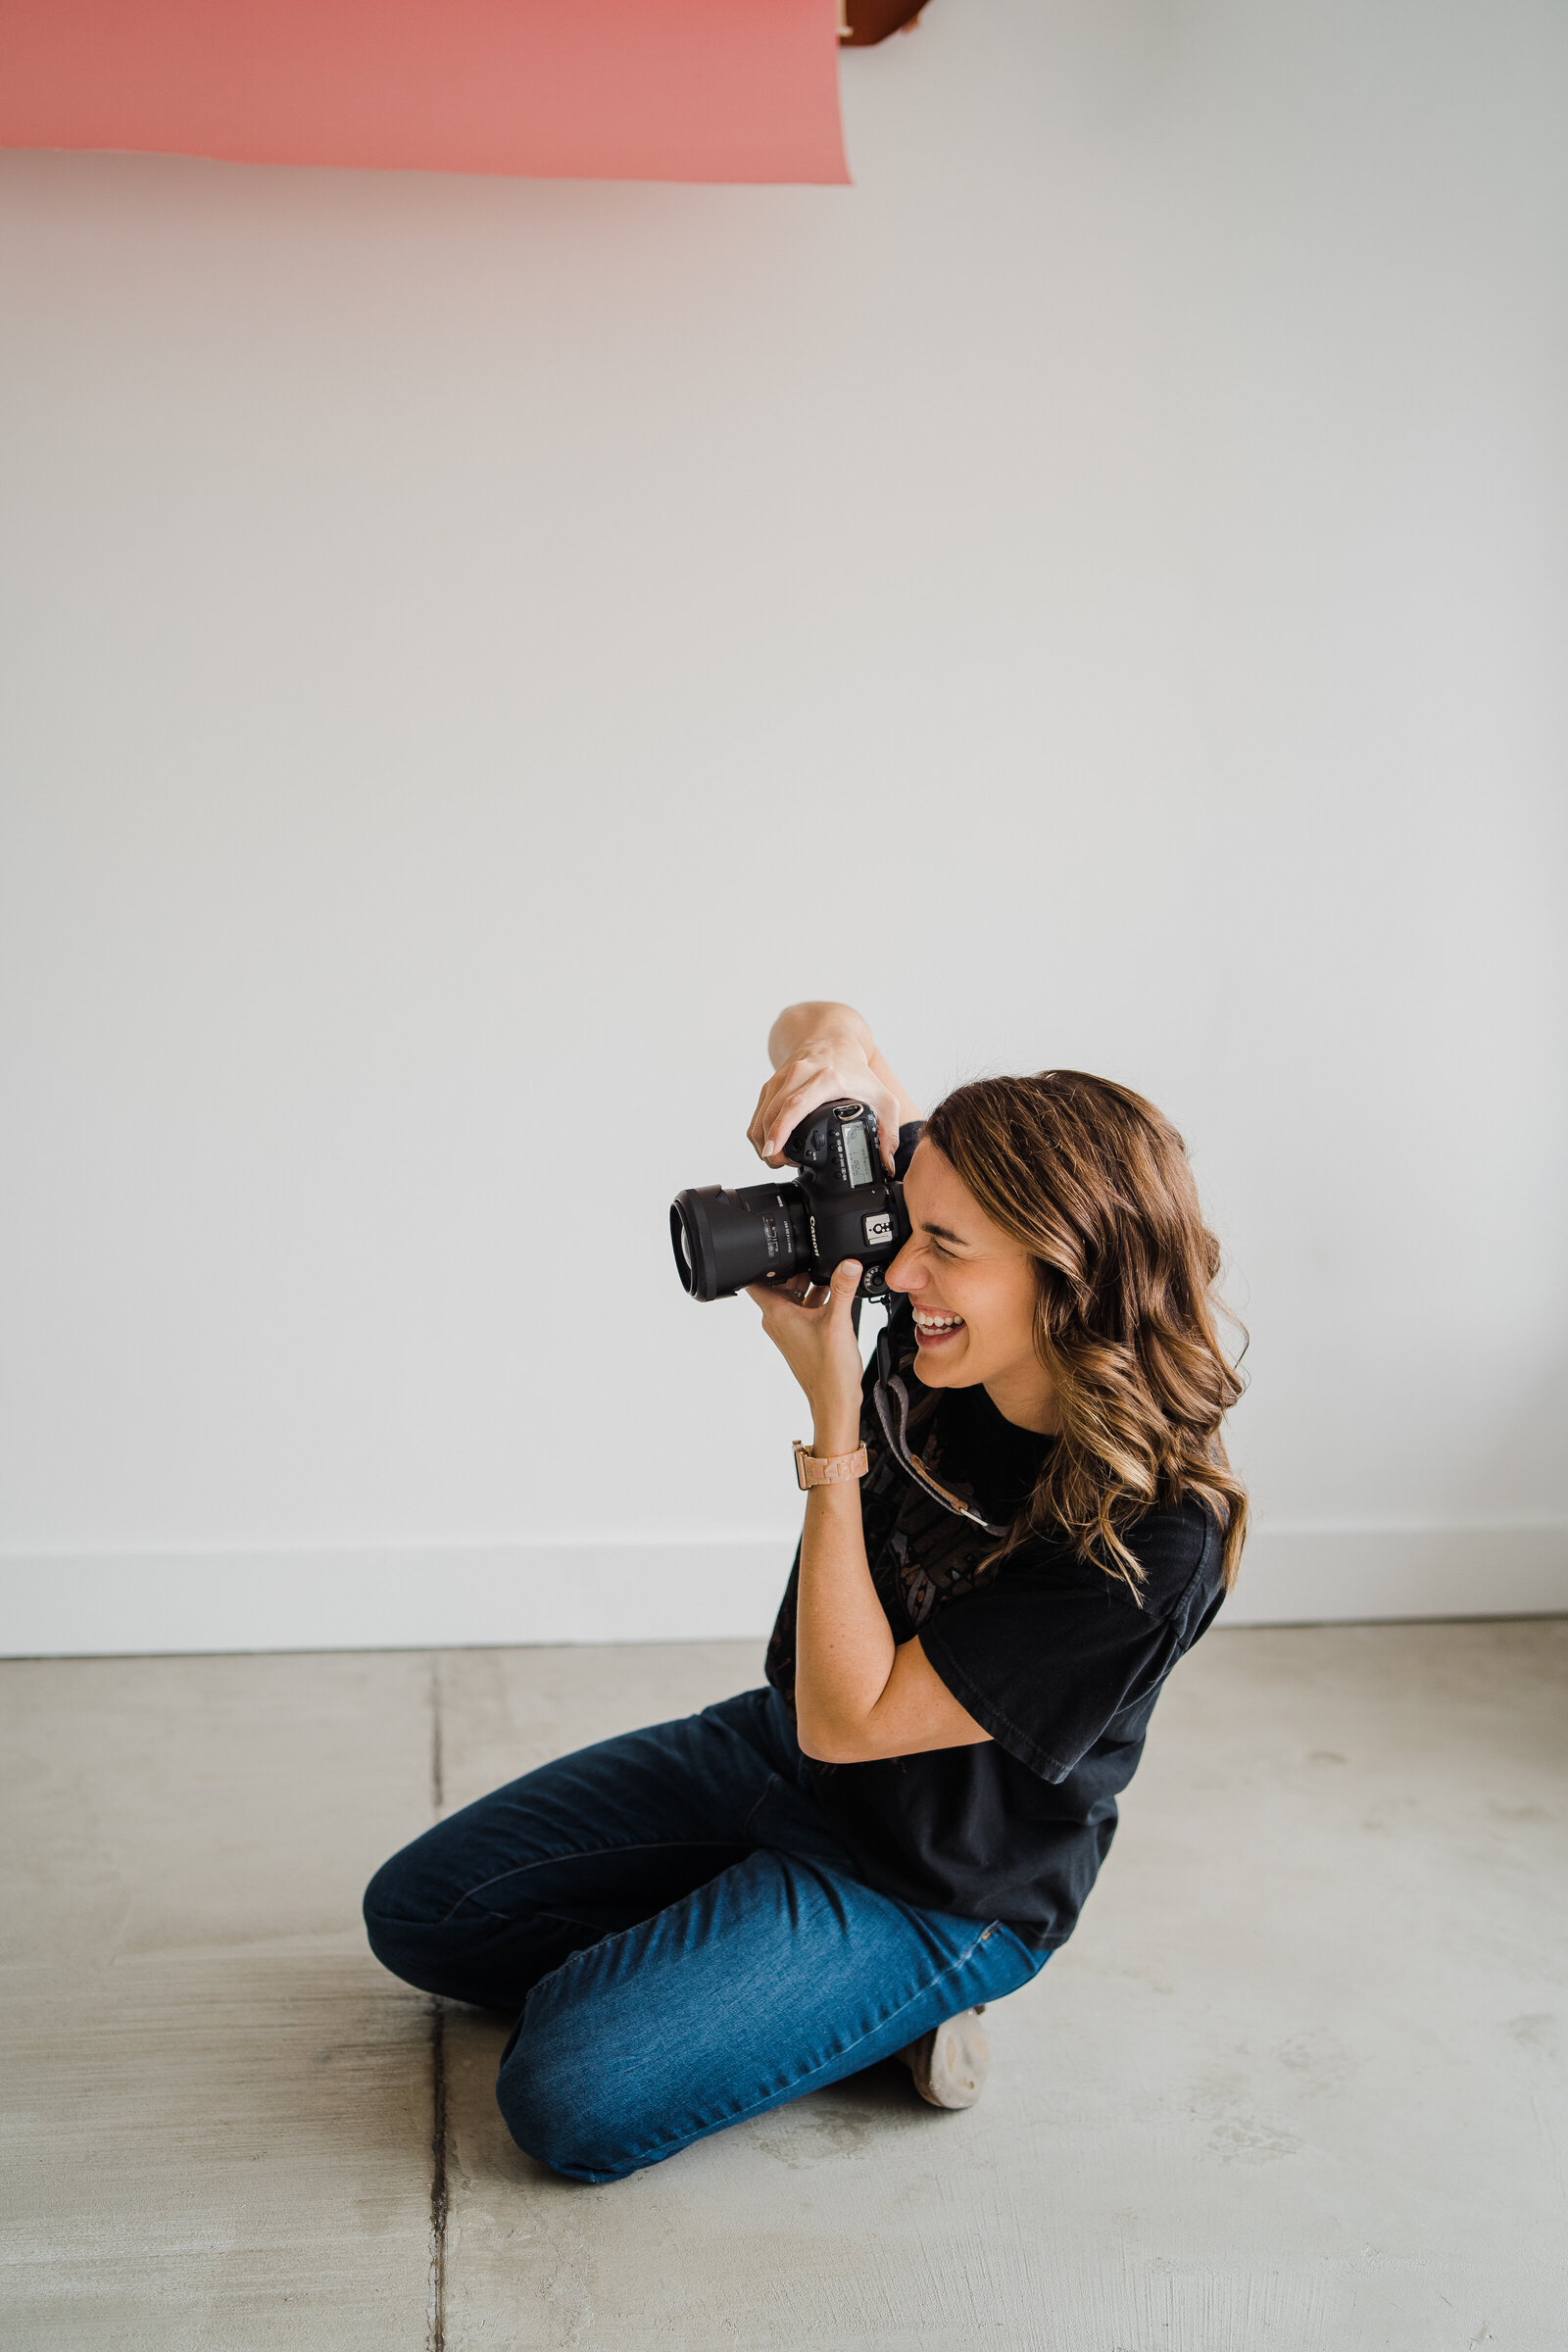 Photographer in studio working holding camera